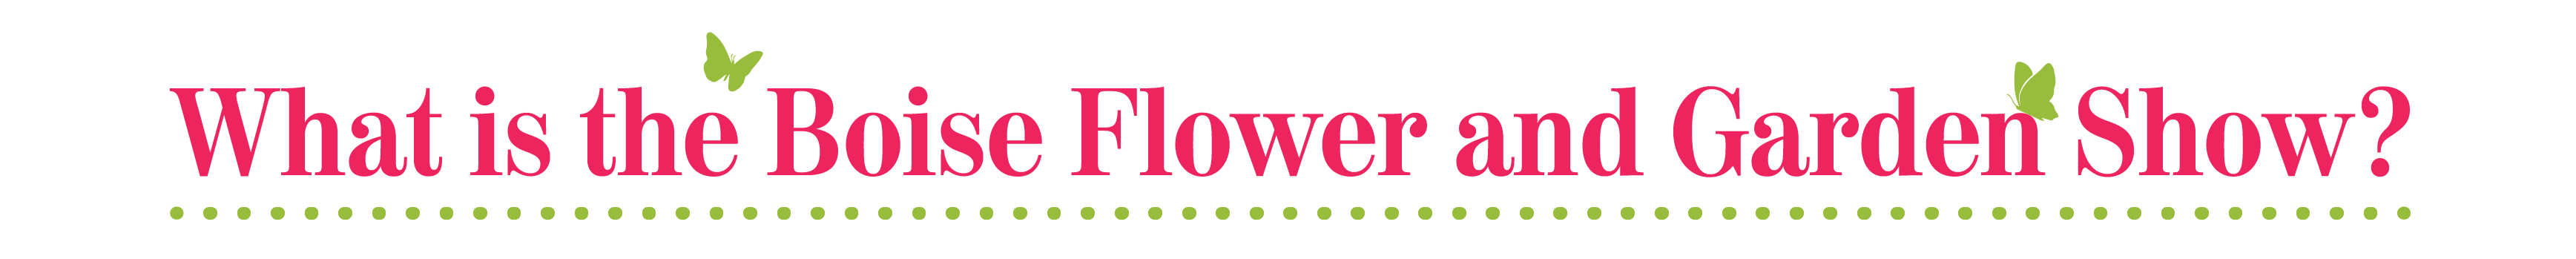 What is the Boise Flower & Garden Show header